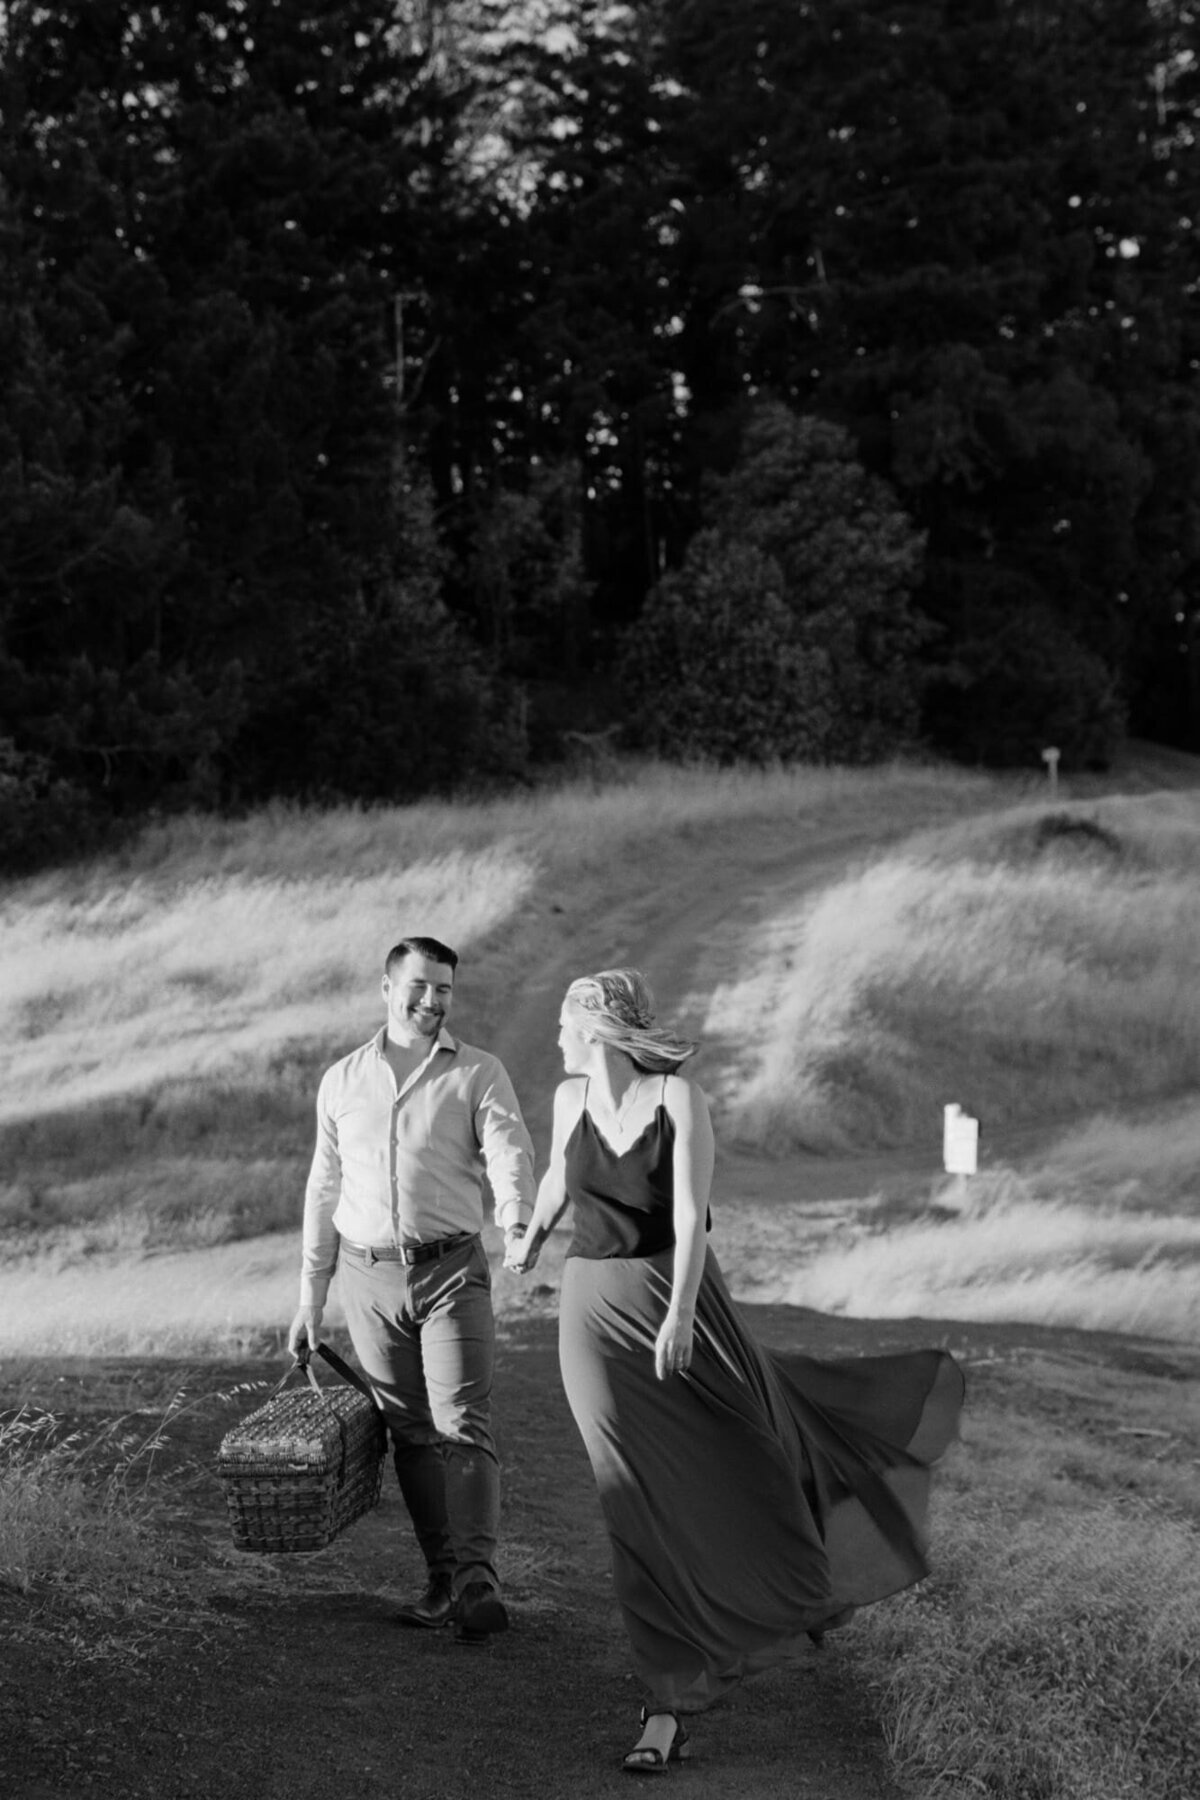 Man carries a basket and follows his jubilant romantic partner through the meadows.